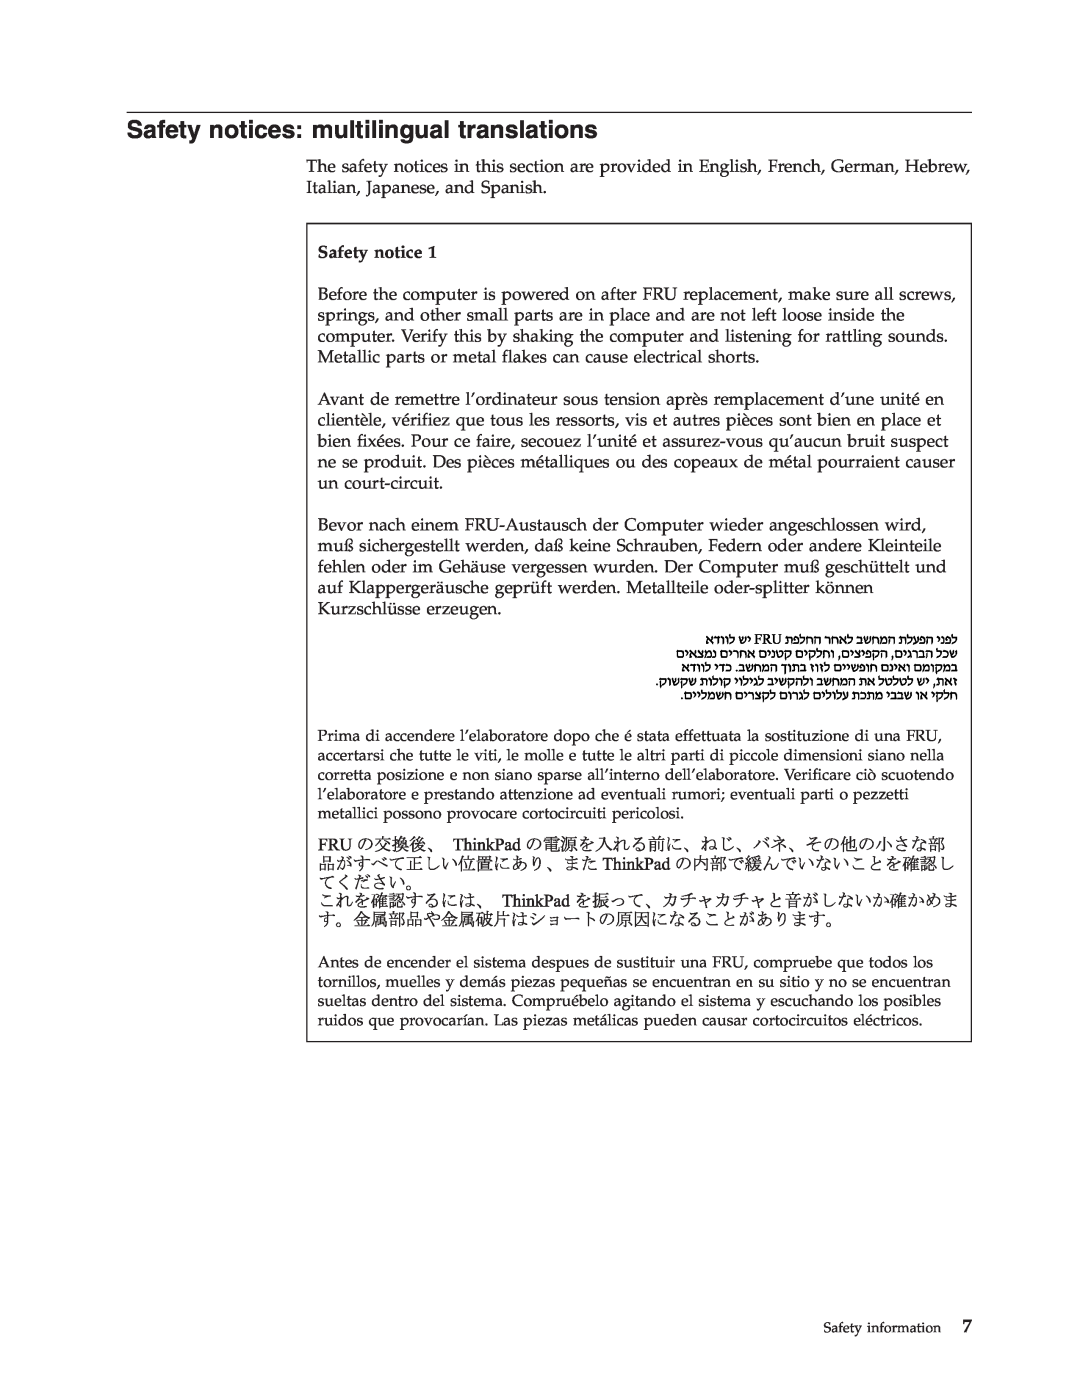 Lenovo X300 manual Safety notices multilingual translations 